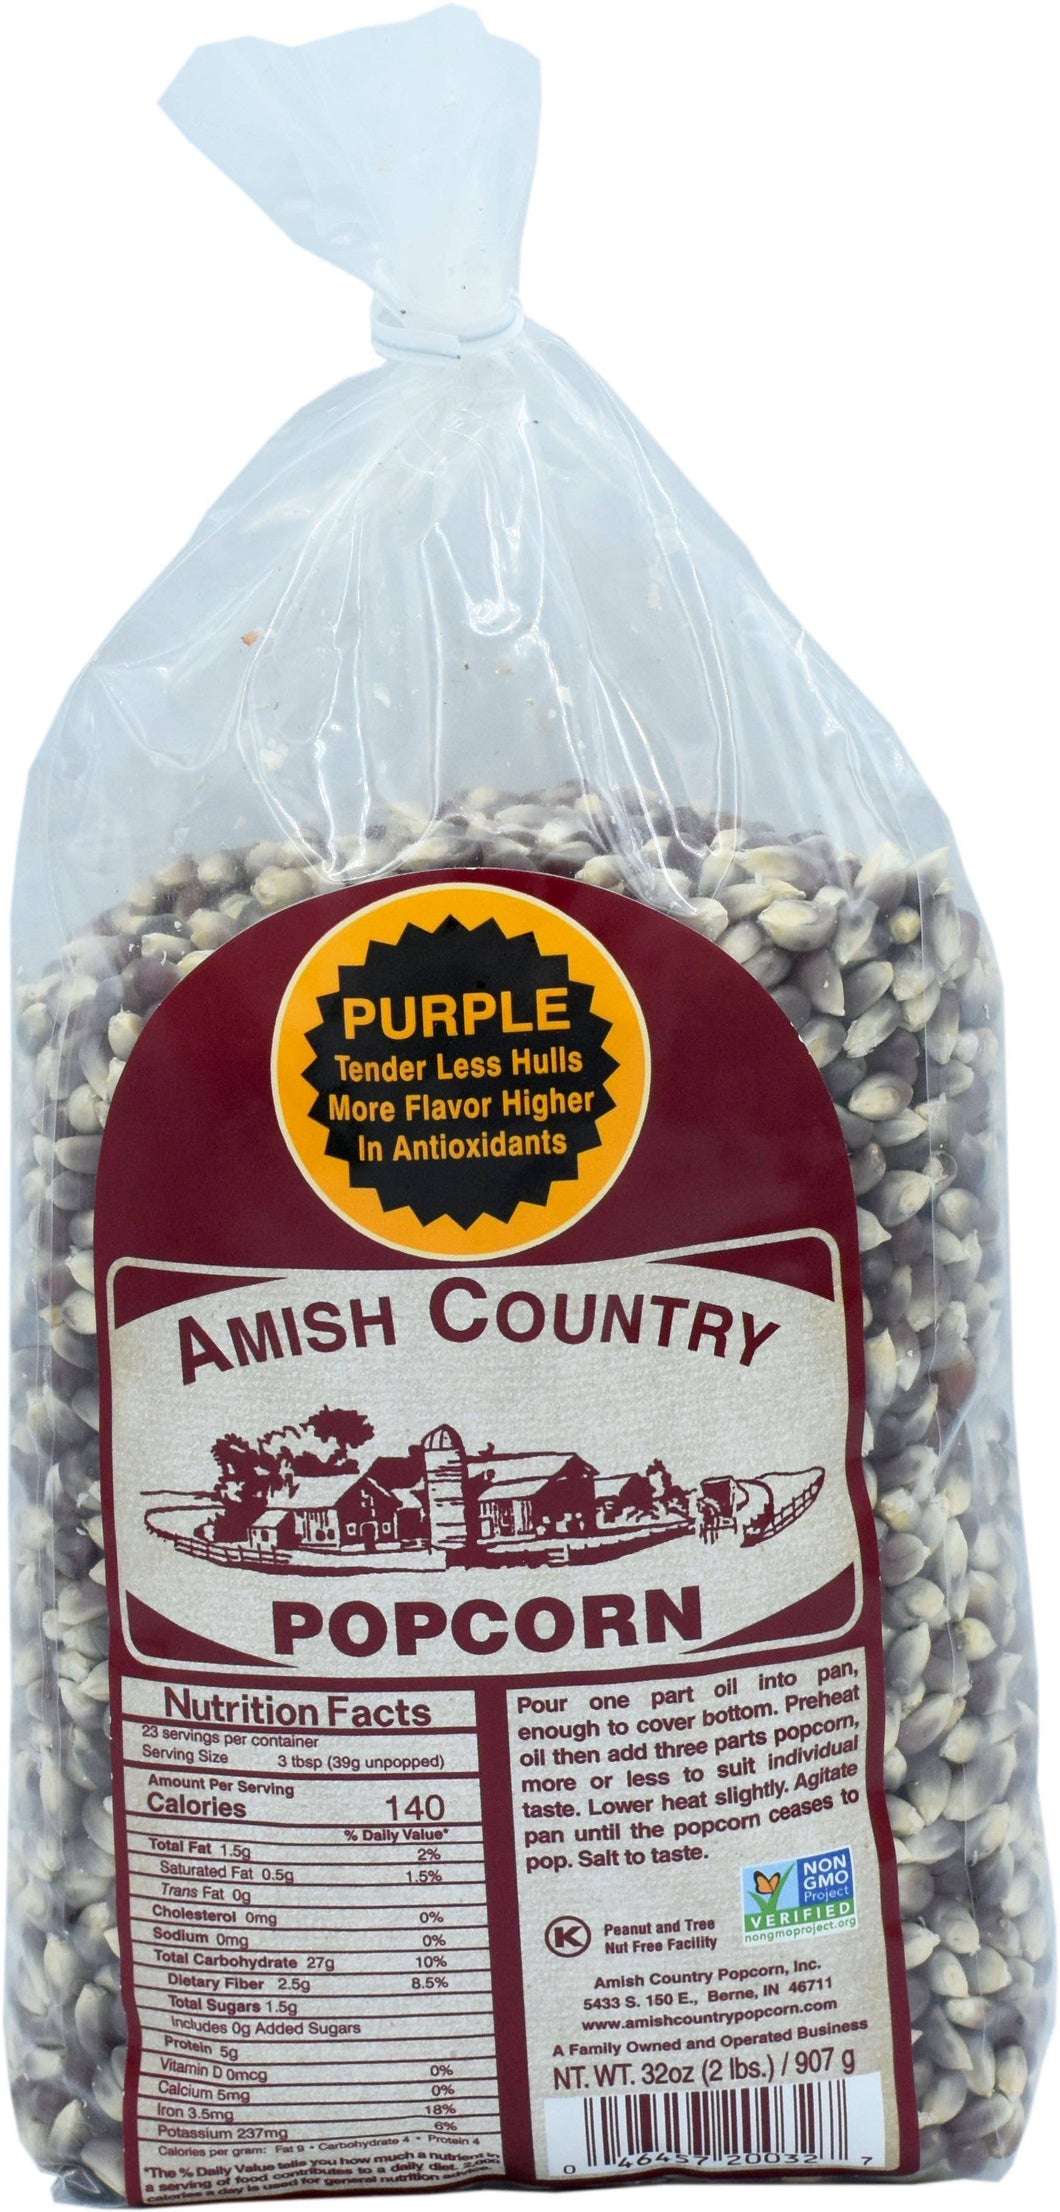 Amish Country Popcorn - 2lb Bag of Purple Popcorn